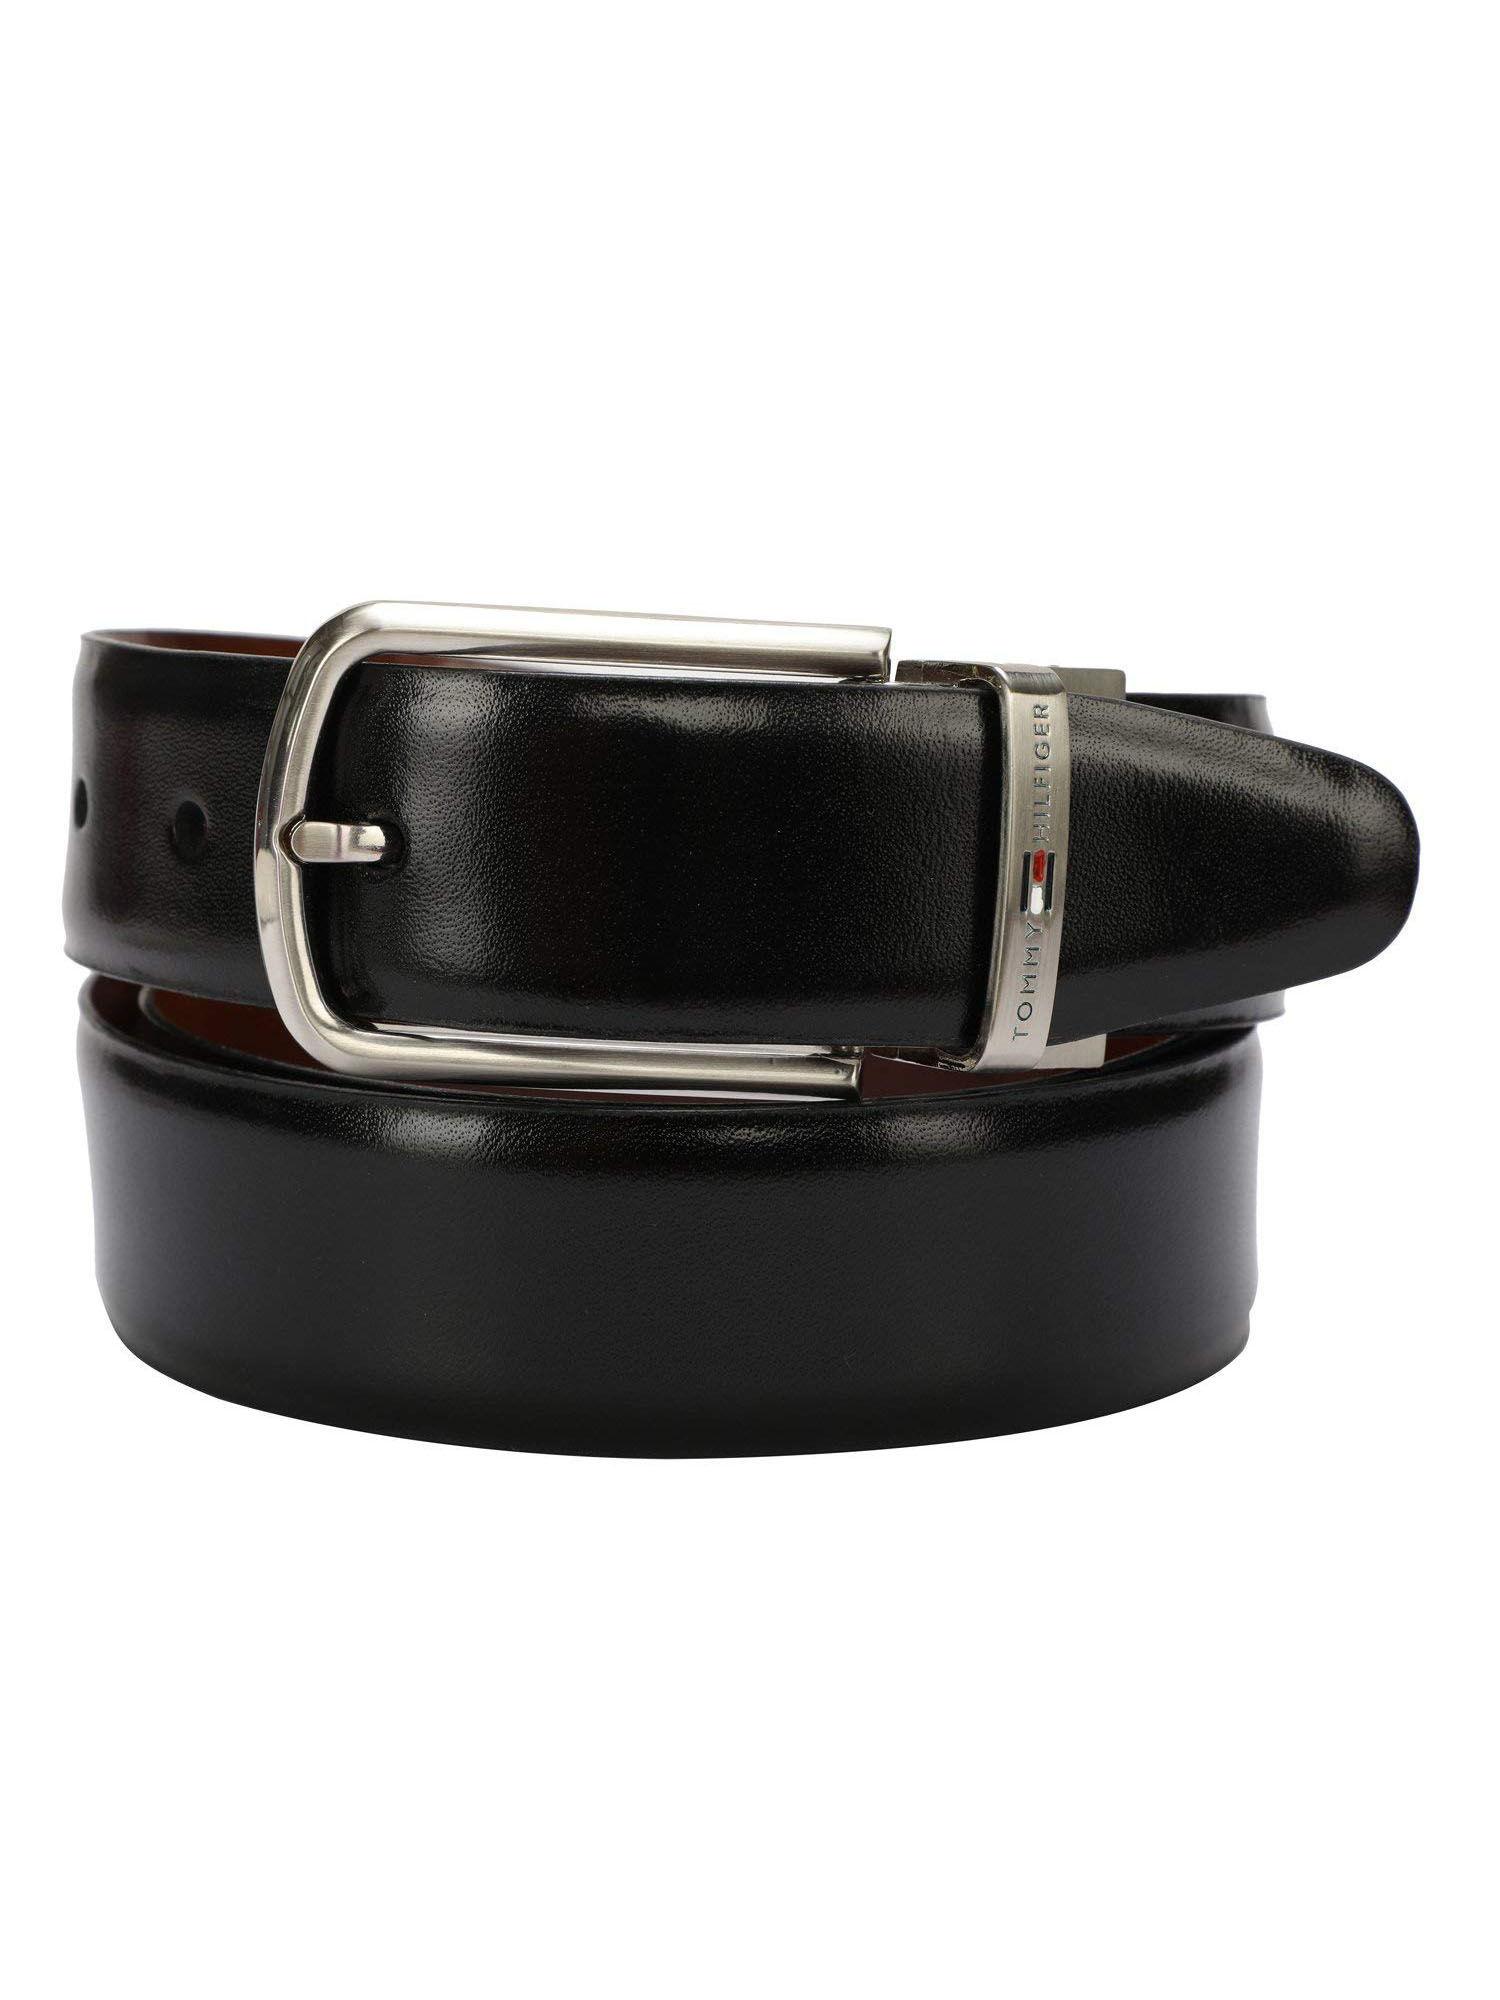 carlson-mens-leather-reversible-belt-small-size-black-+-tan-(8903496097337)